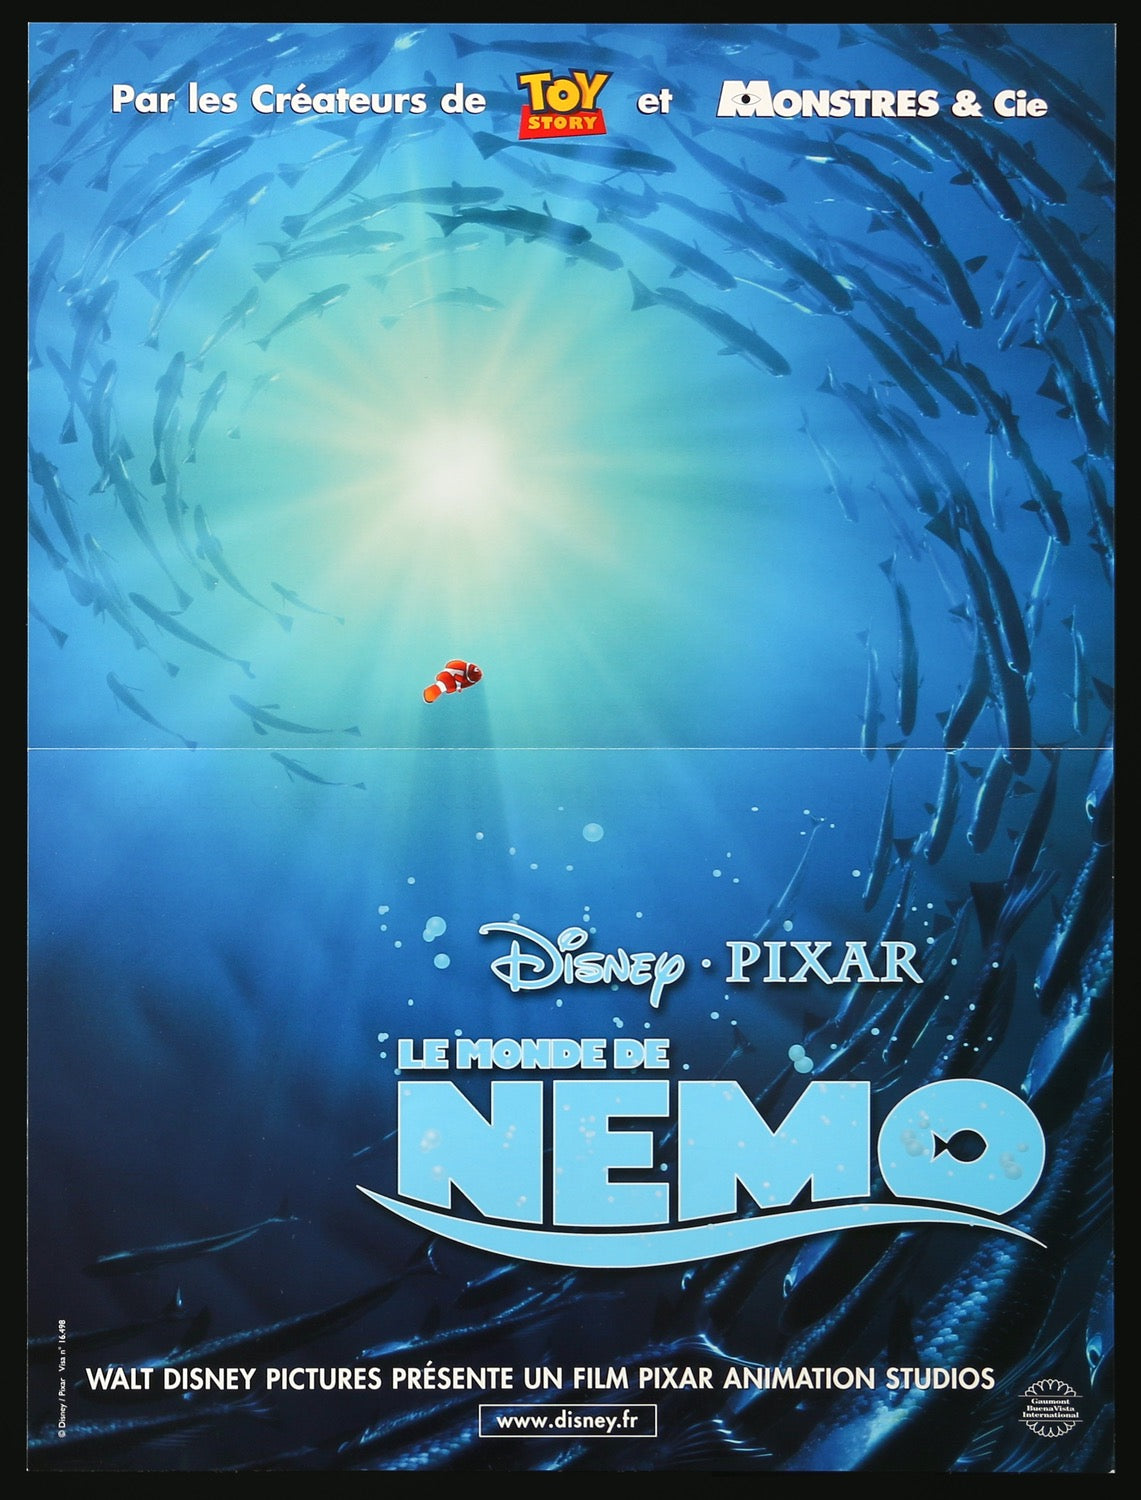 Finding Nemo (2003) original movie poster for sale at Original Film Art